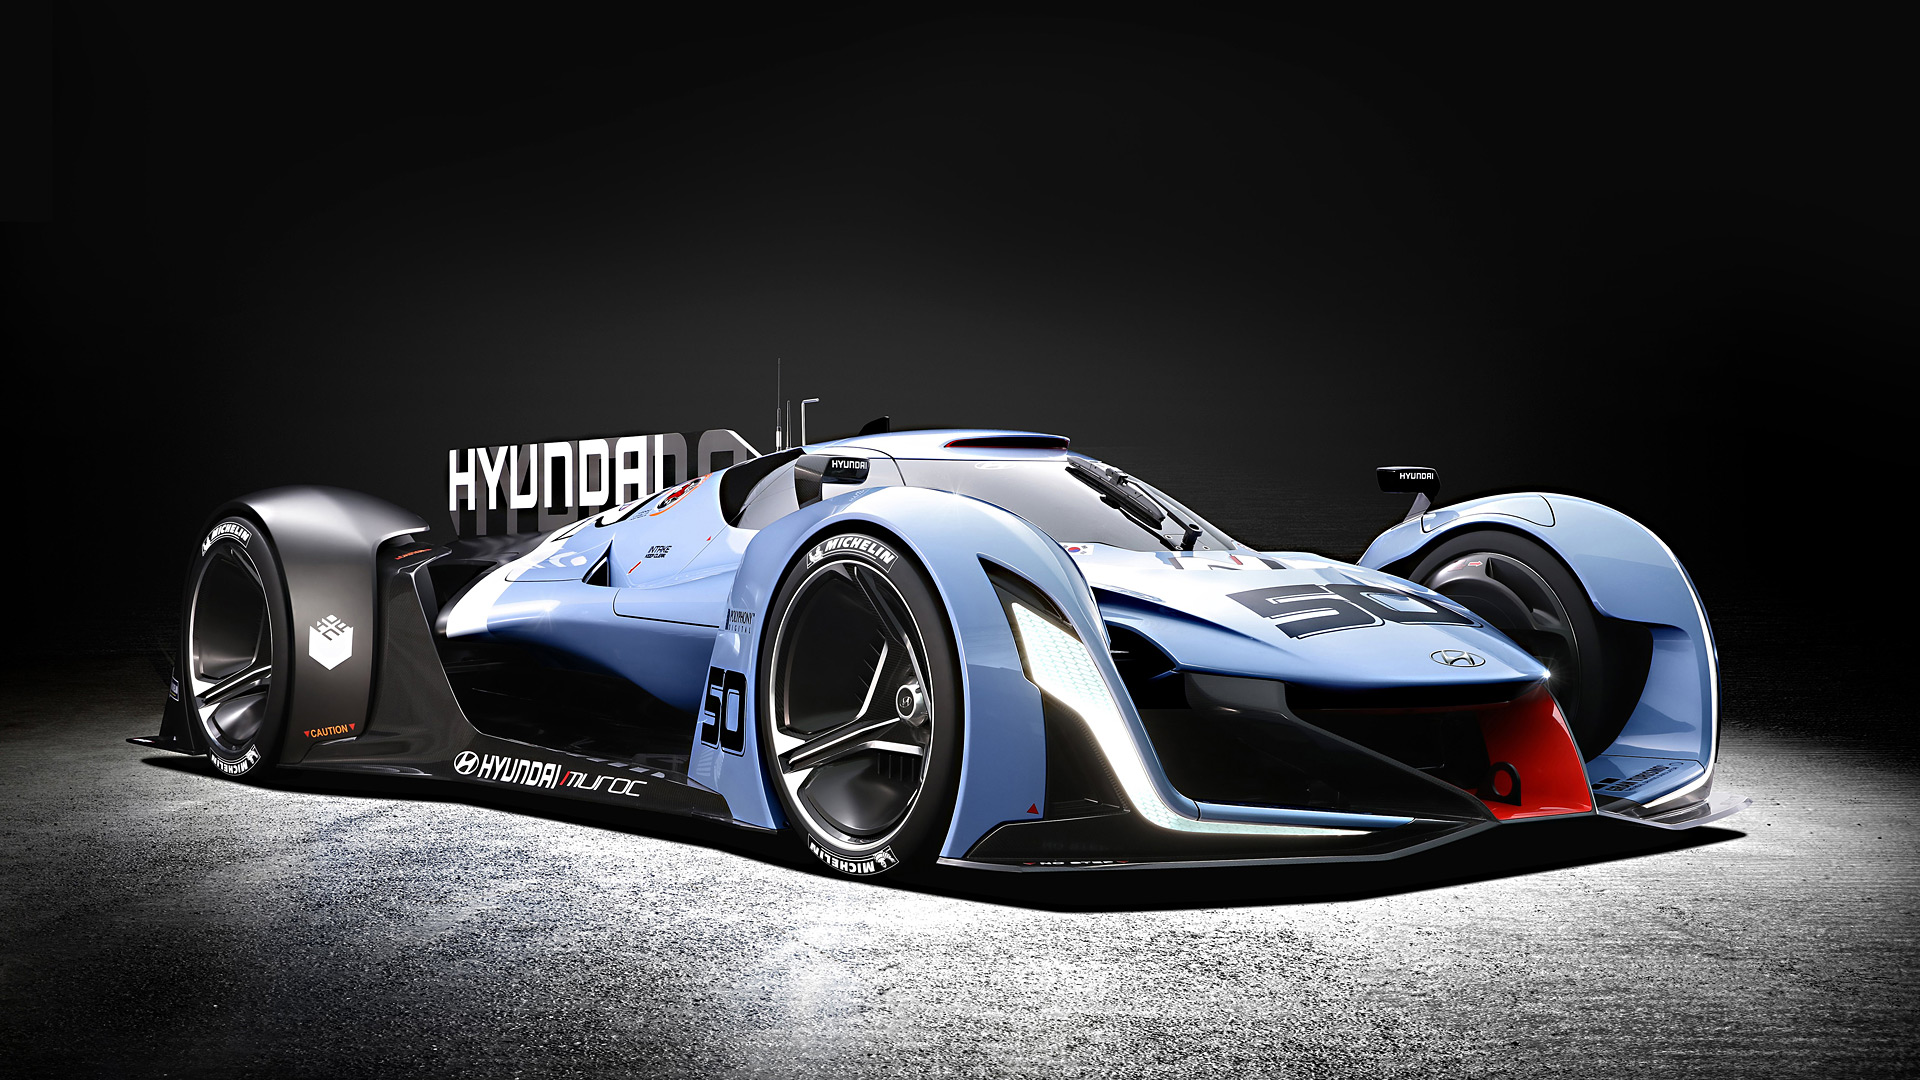  2015 Hyundai N 2025 Vision Gran Turismo Concept Wallpaper.